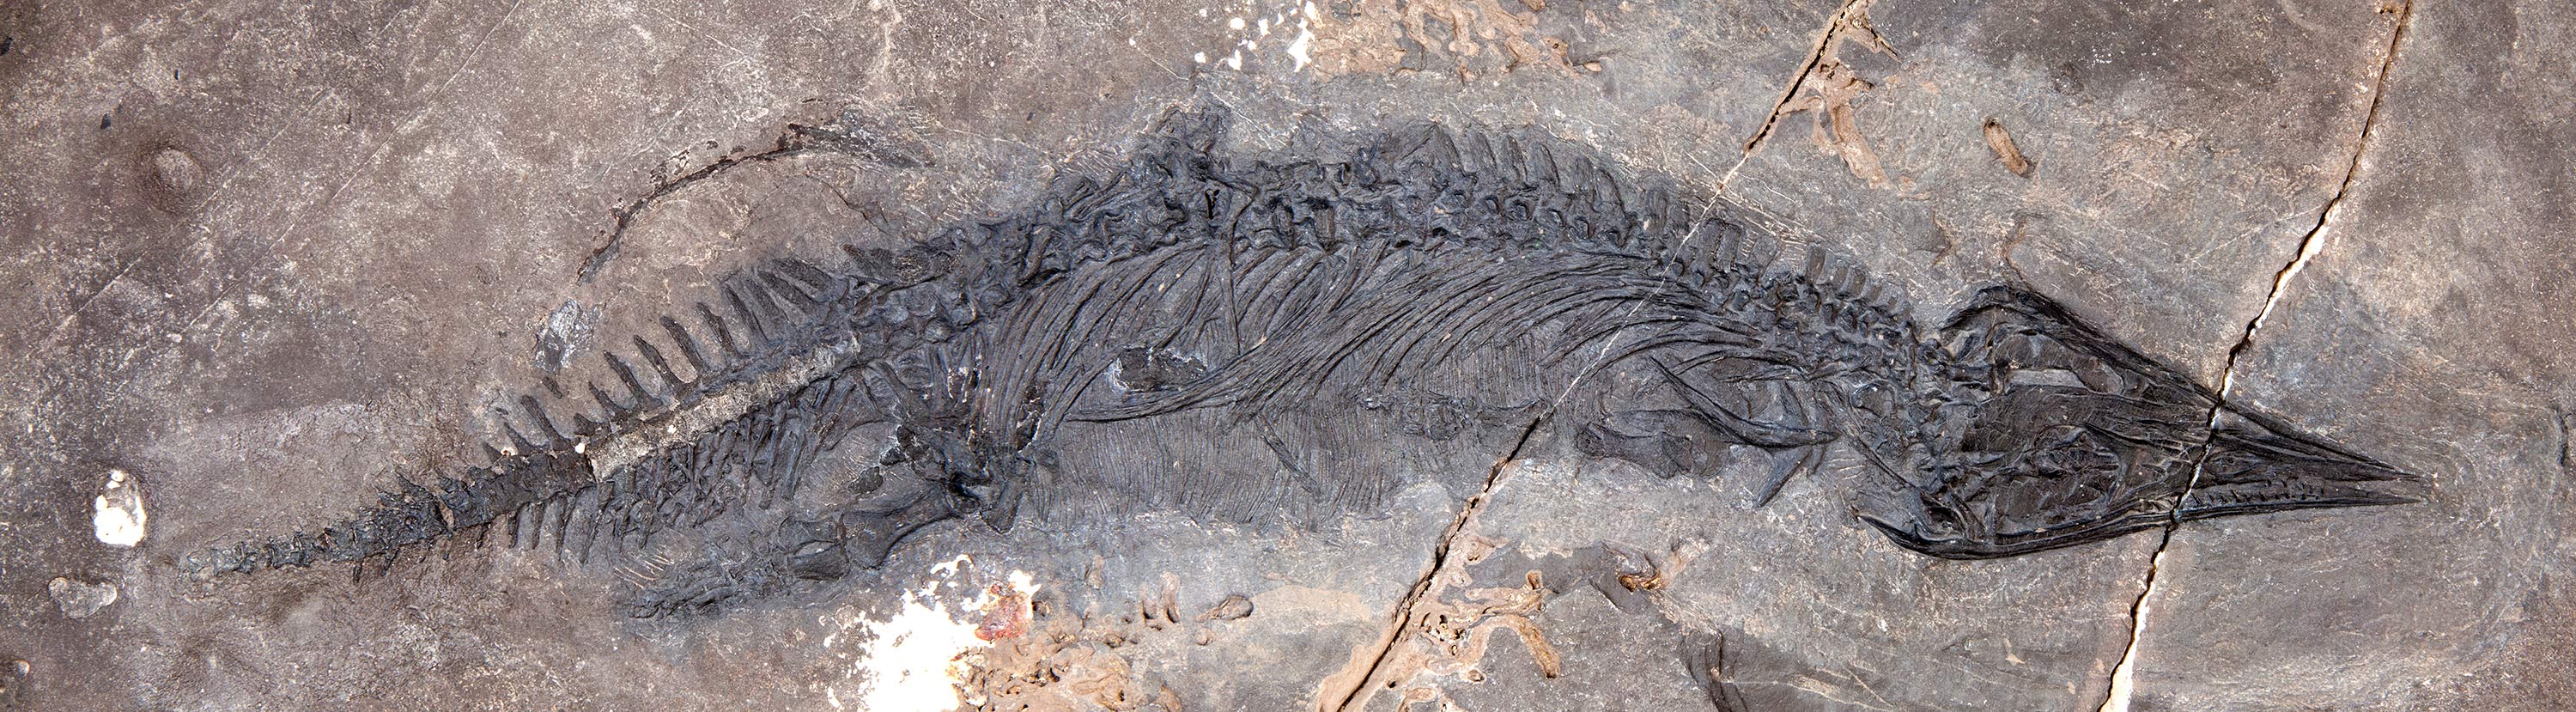 Скелет древних рептилий